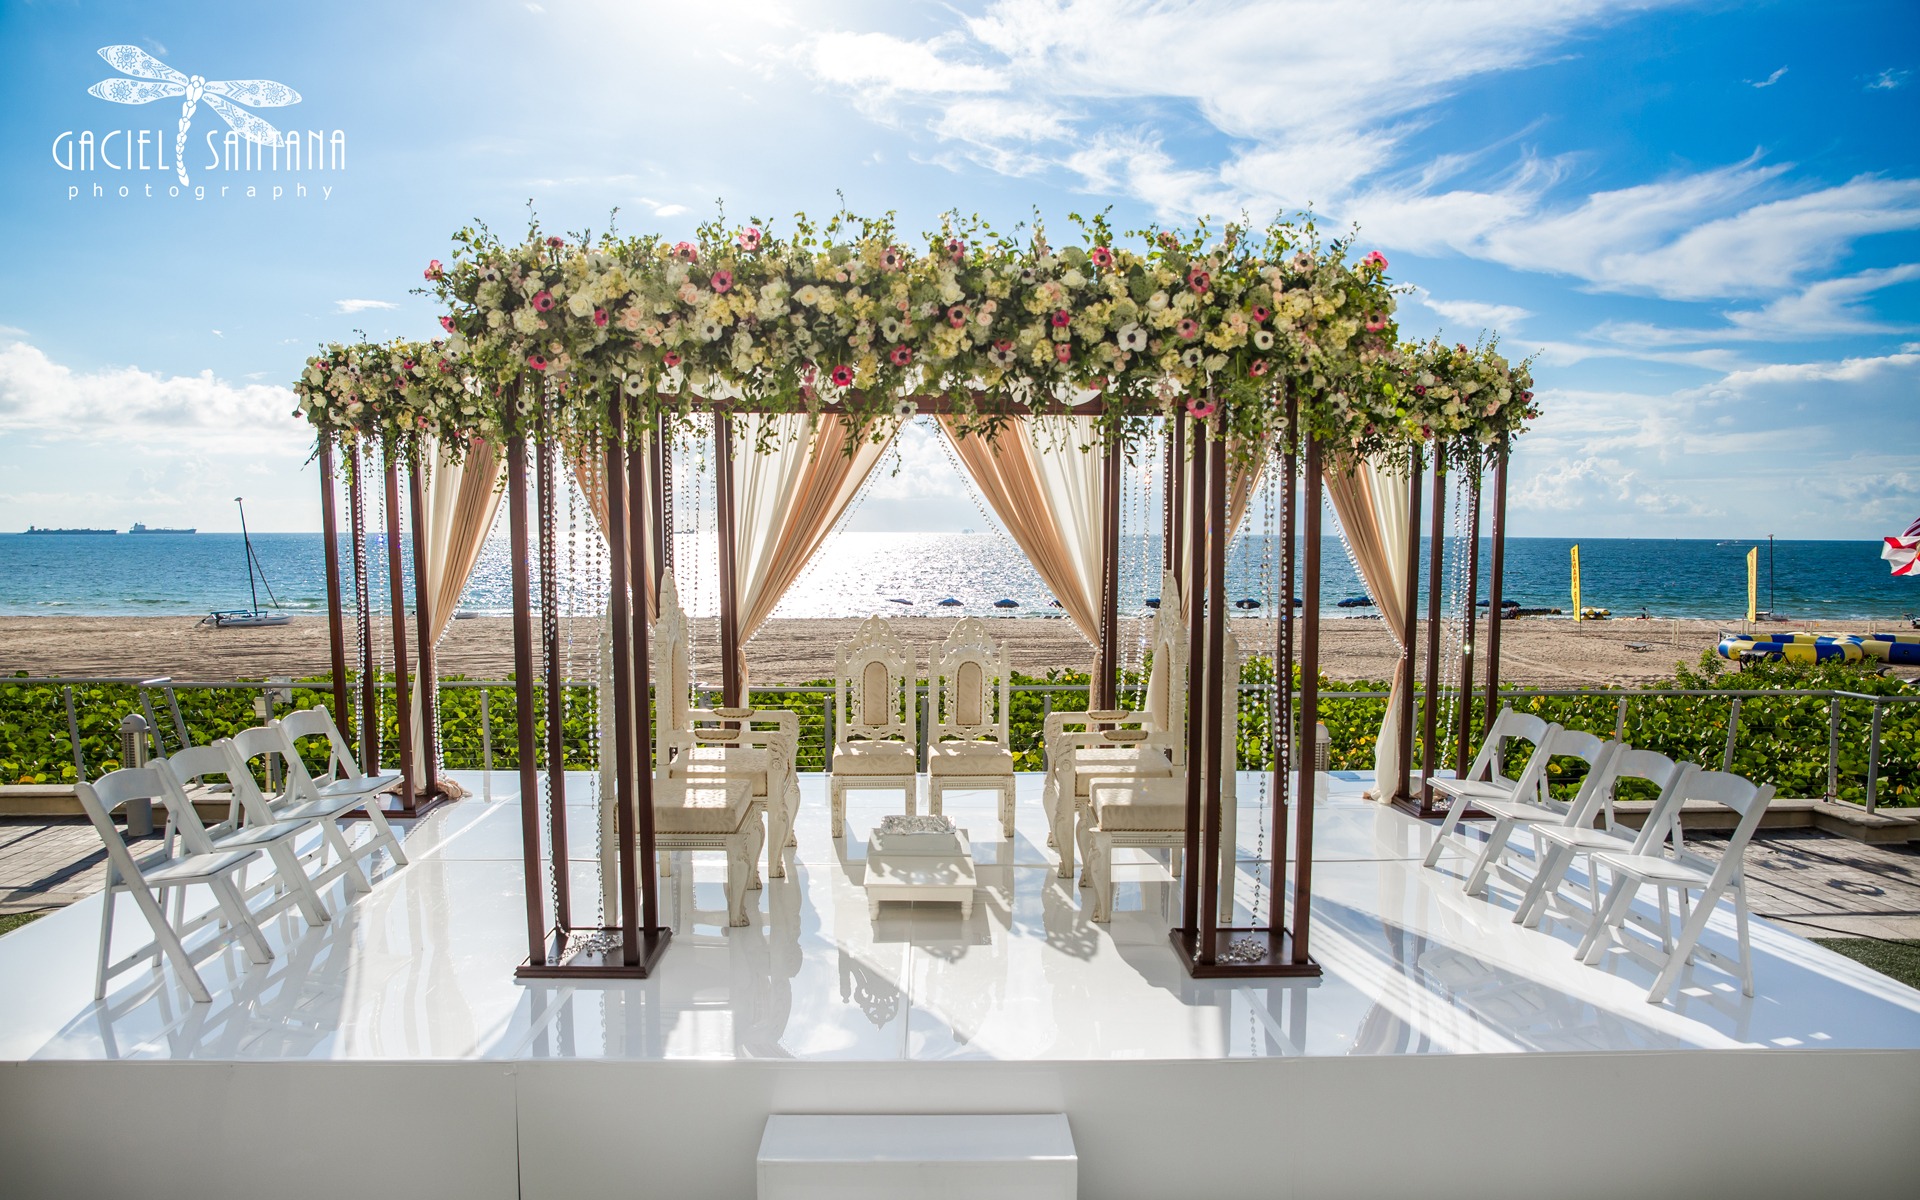 Seaside Dreams Ceremony Modern Rustic 1 South Asian Indian Wedding Decor Design Suhaag Garden Florida